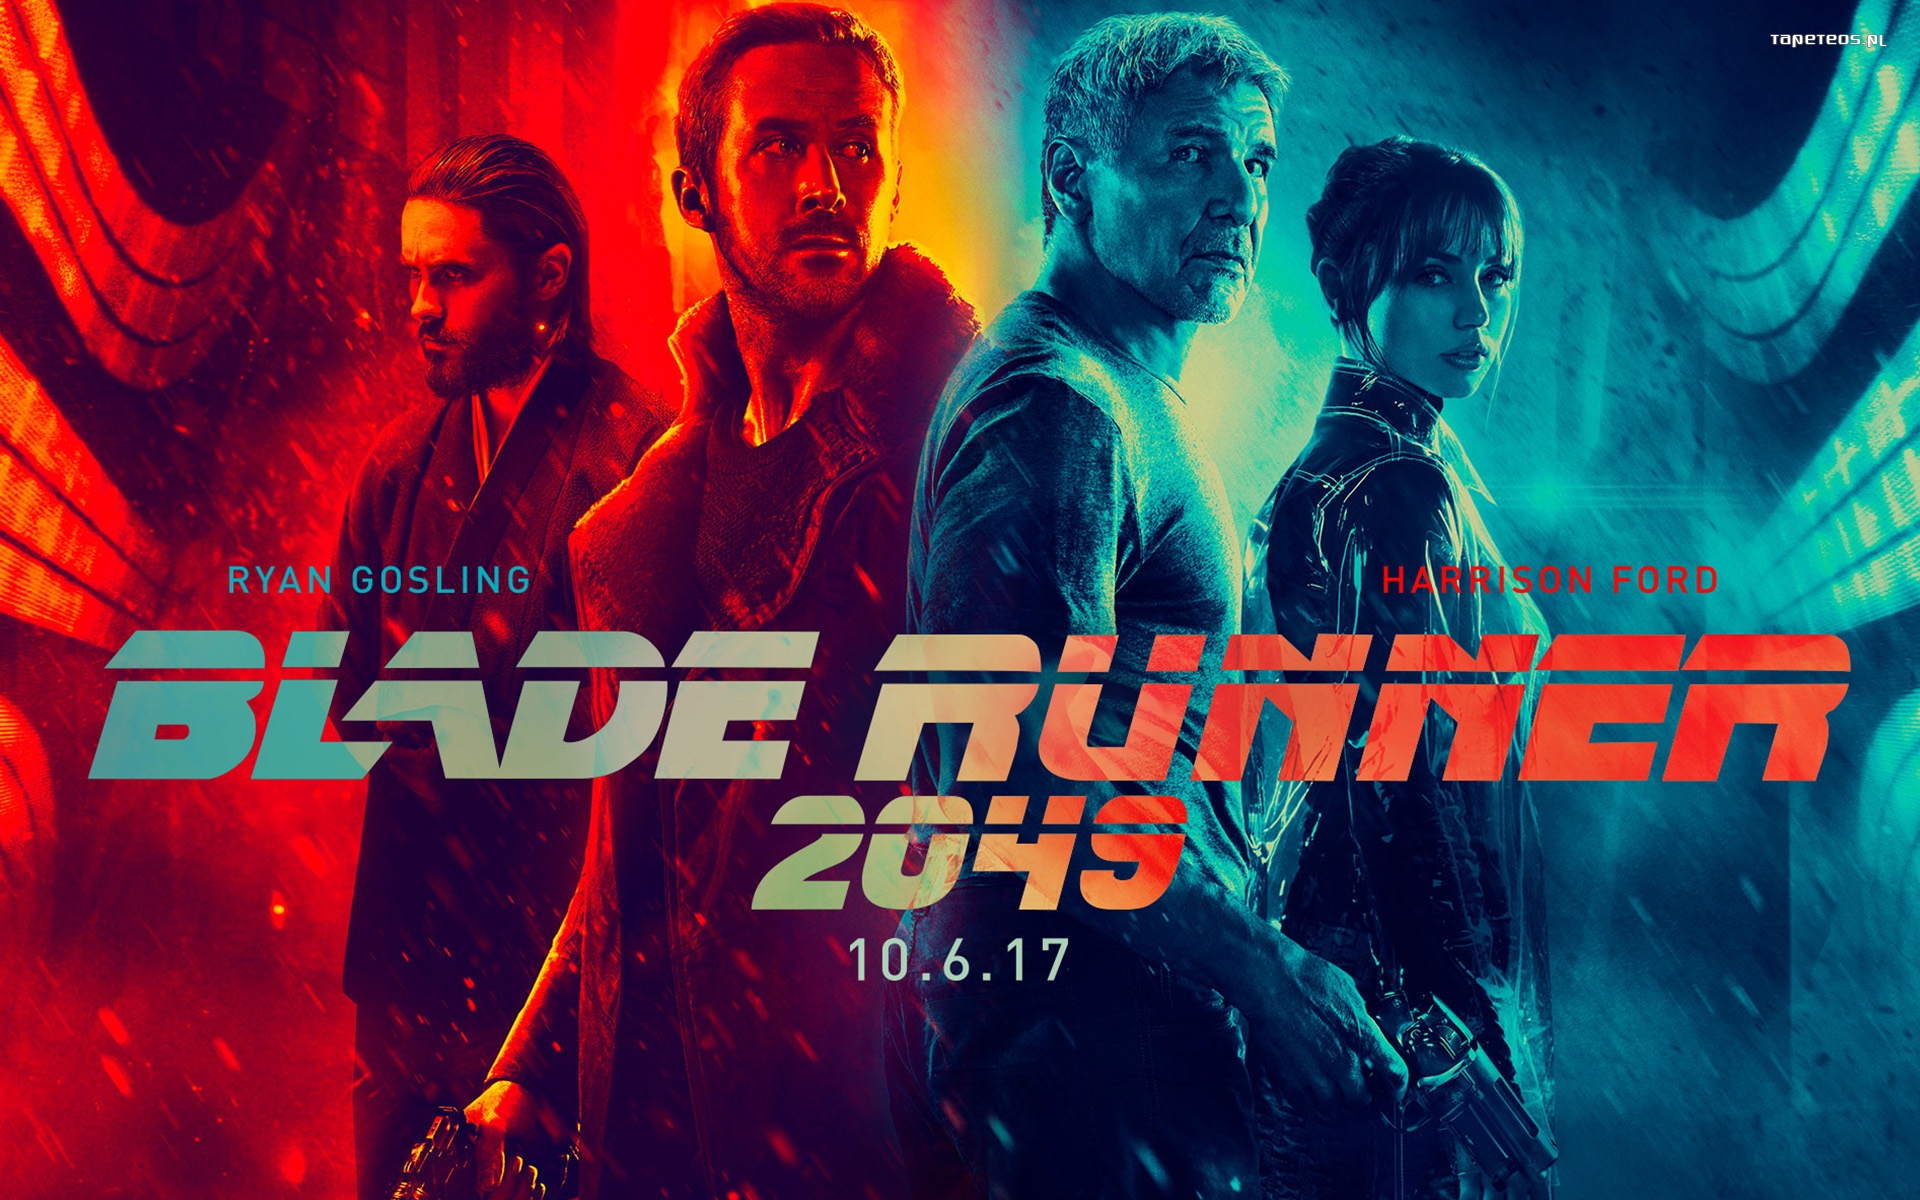 Blade Runner 2049 (2017) 001 Jared Leto, Ryan Gosling, Harrison Ford, Ana de Armas